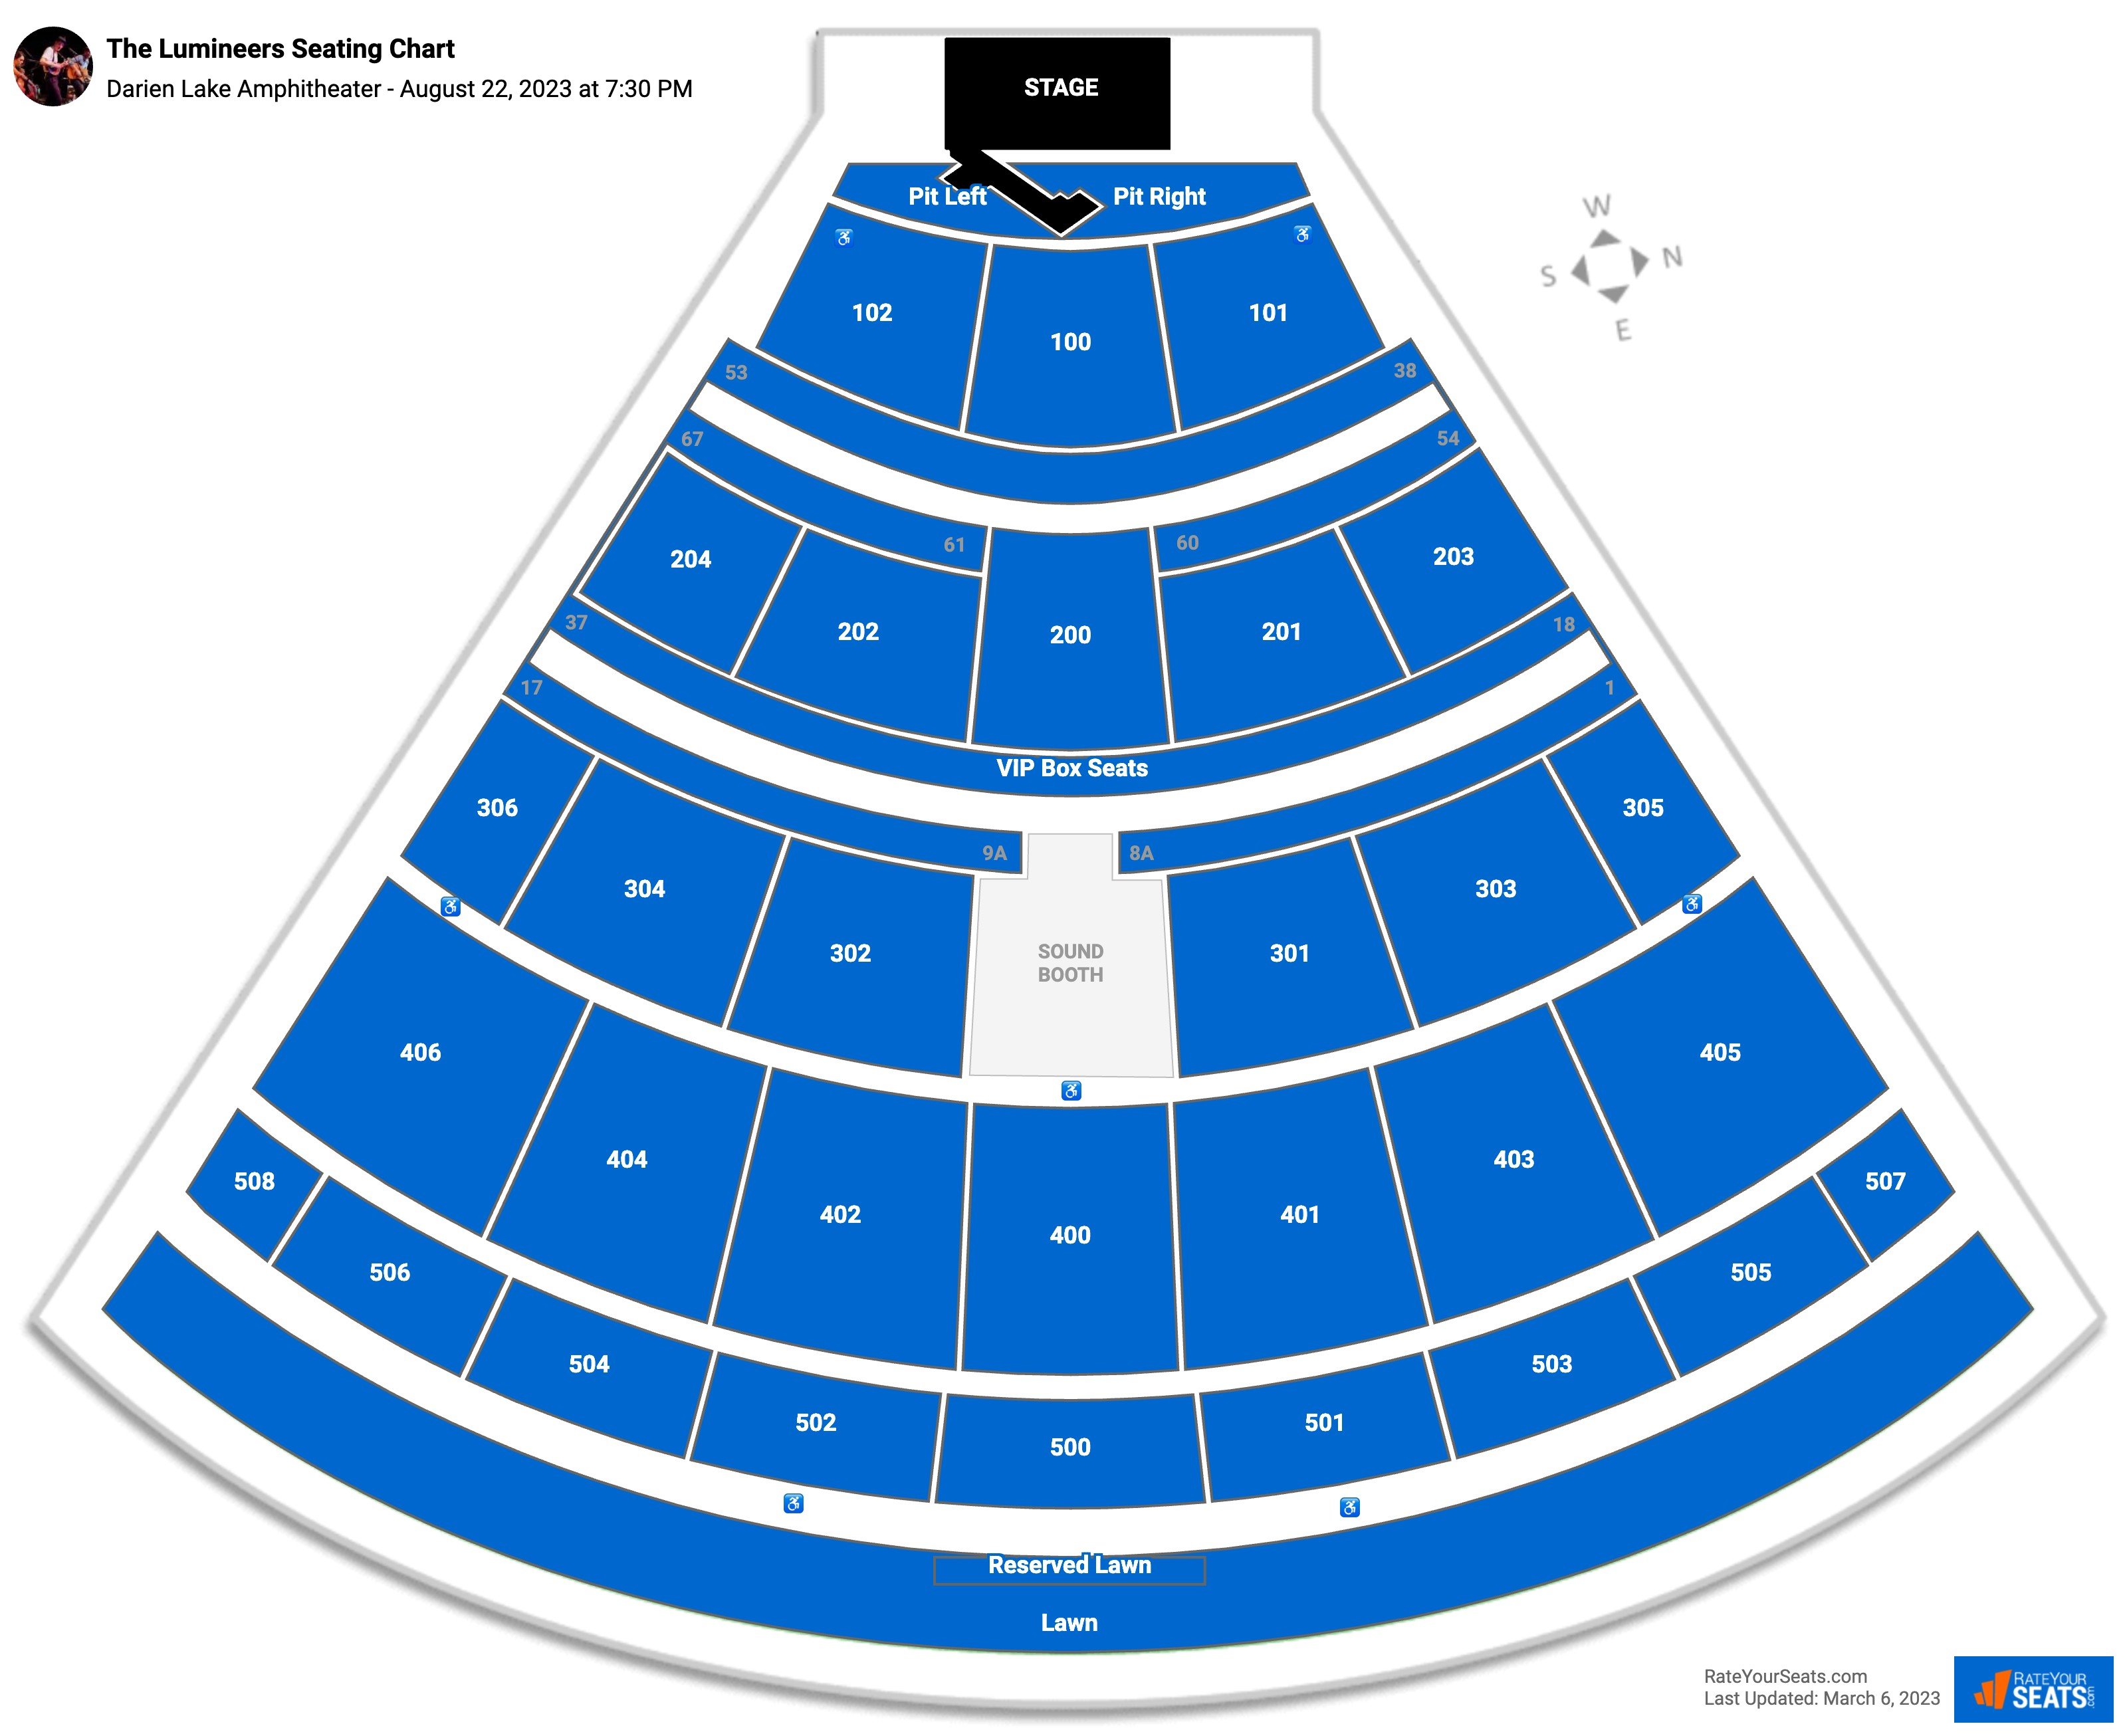 Darien Lake Amphitheater Seating Chart